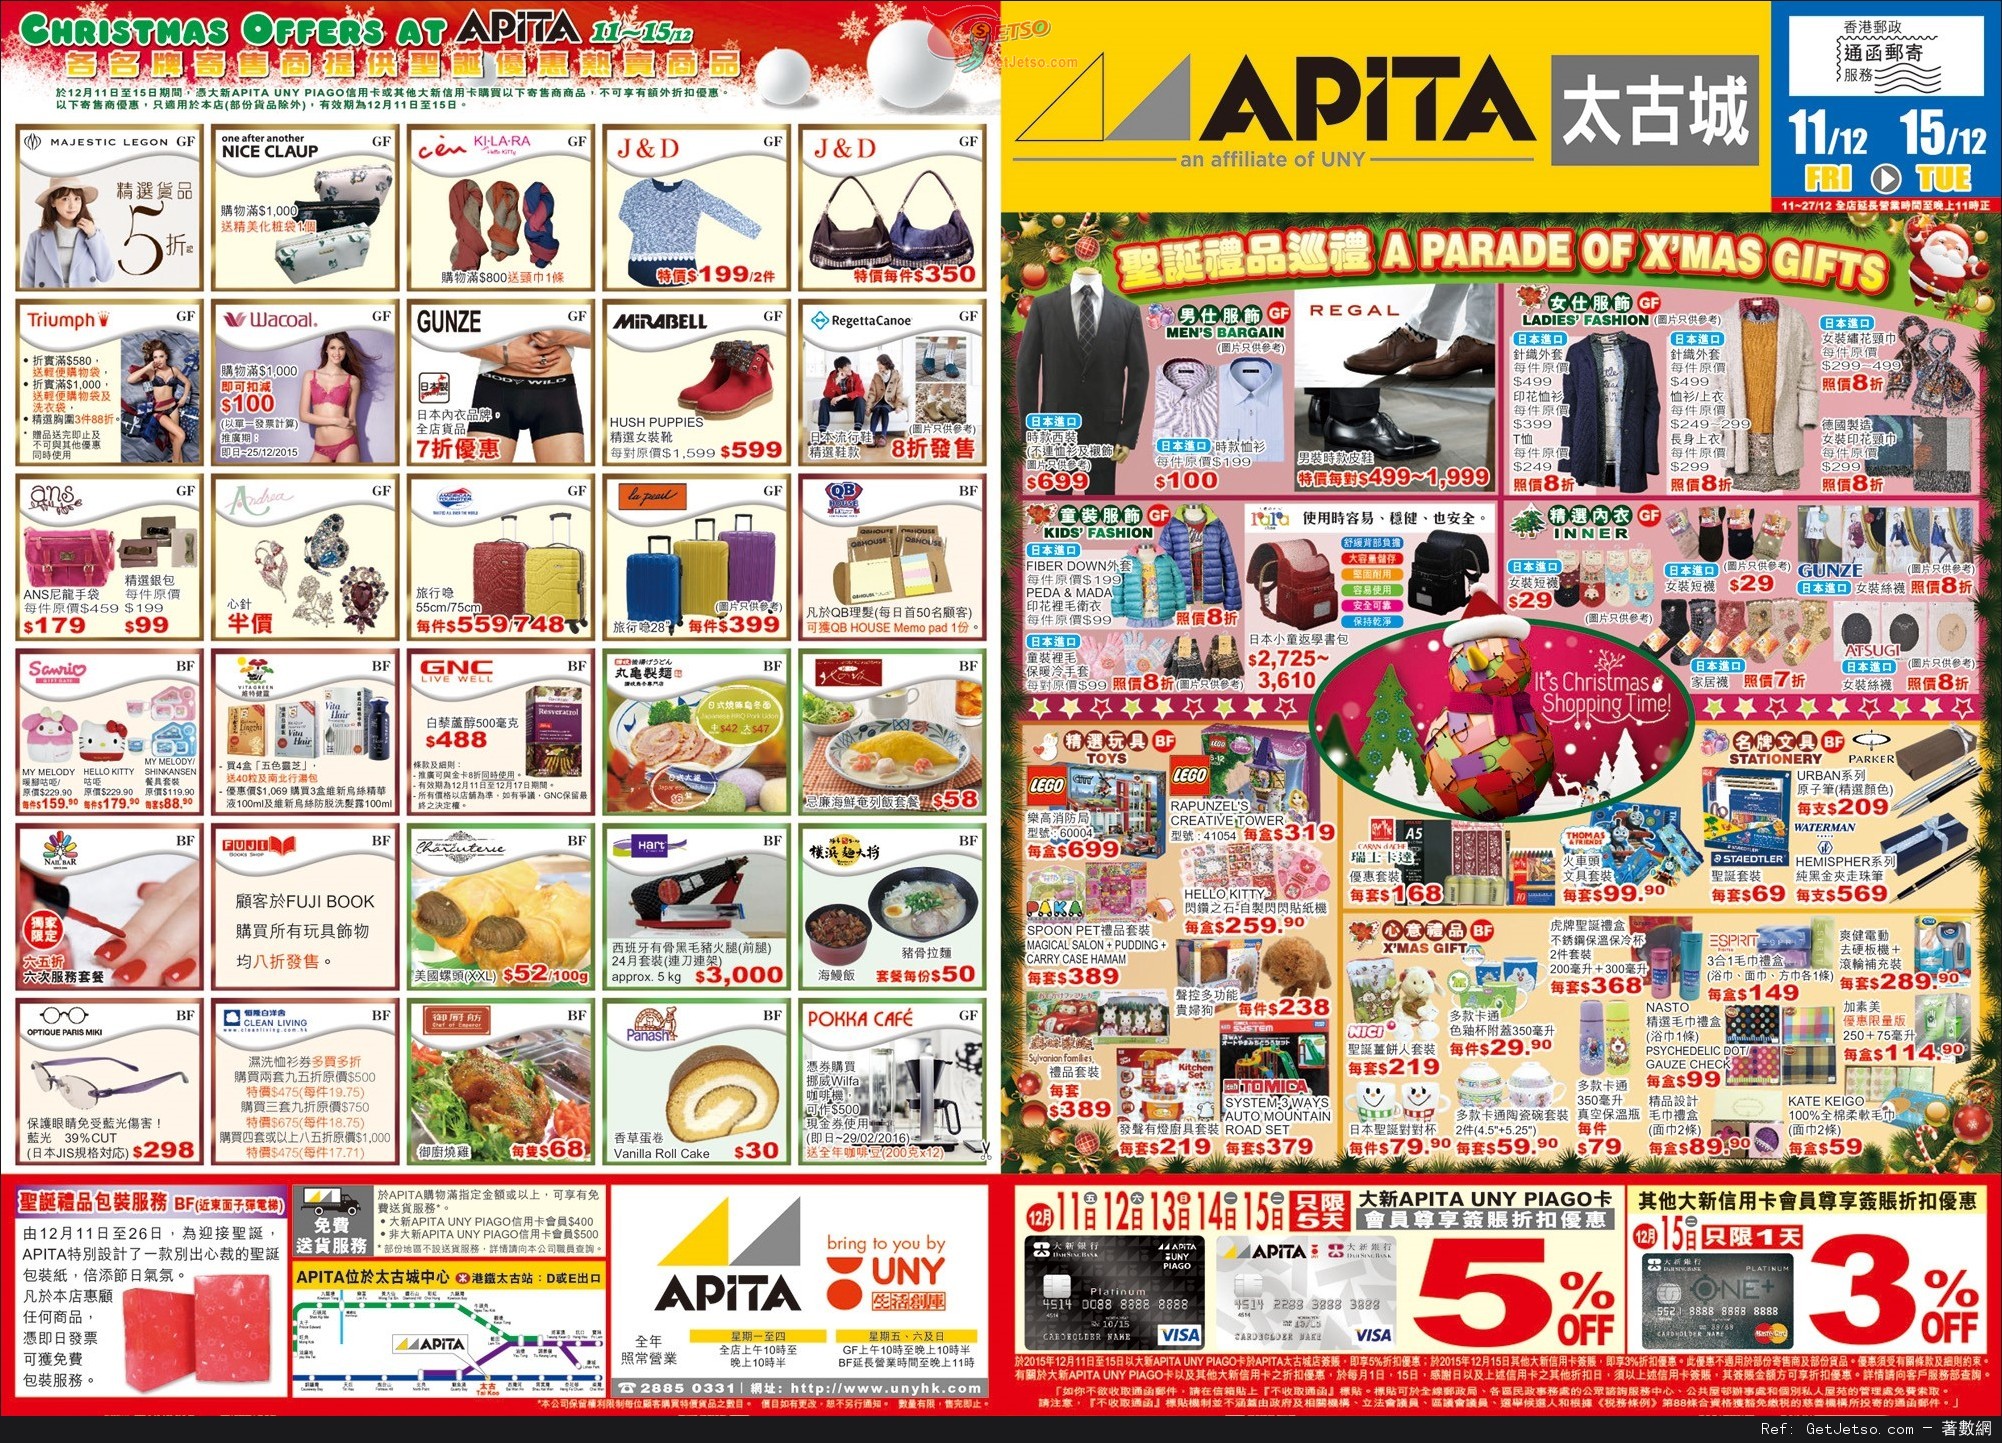 APITA/UNY 聖誕店內購物優惠(15年12月11-15日)圖片1